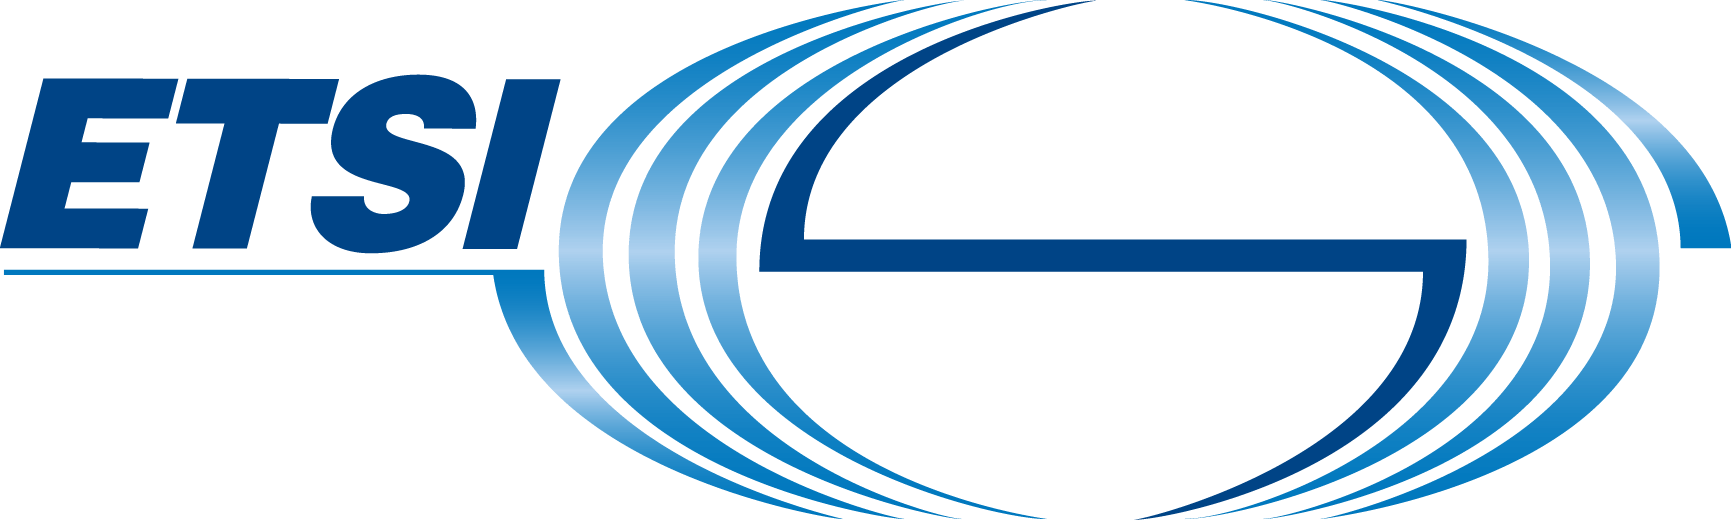 ETSI Logo [The European Telecommunications Standards Institute] png